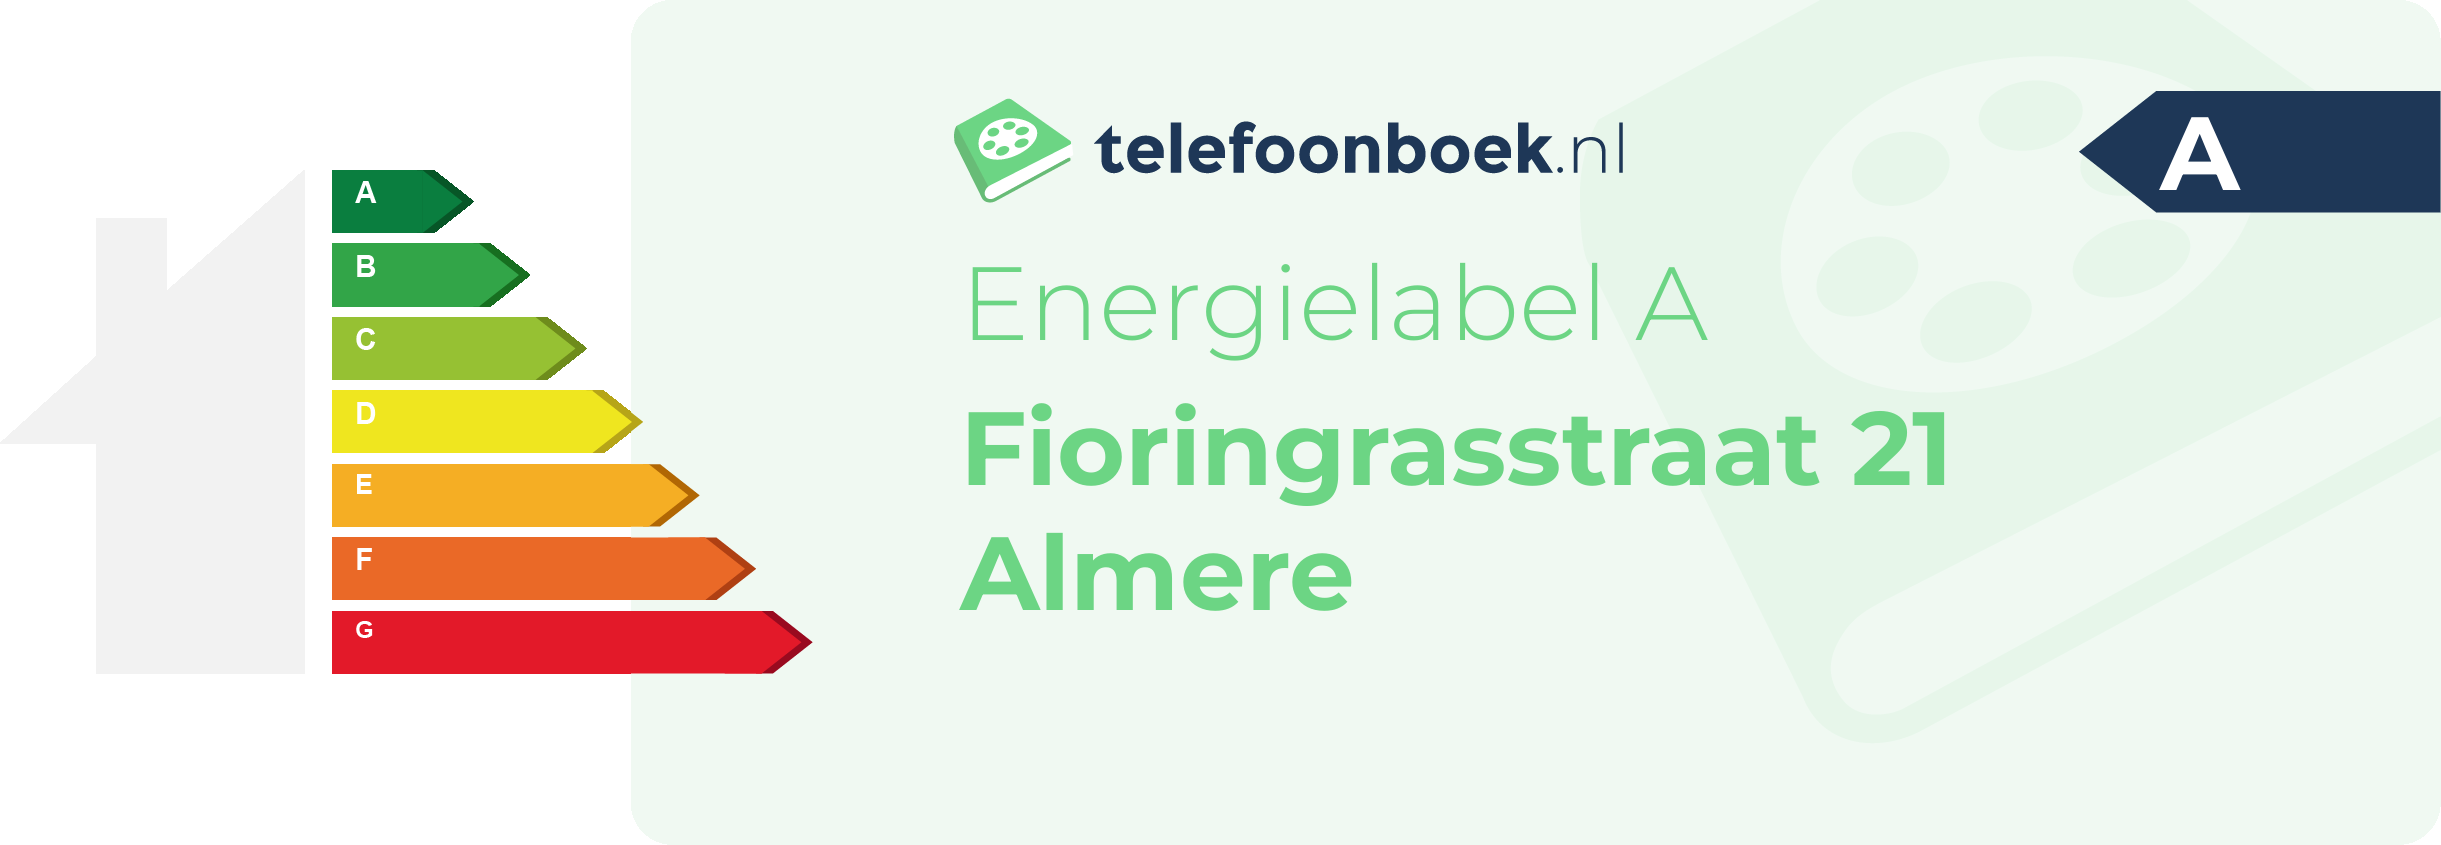 Energielabel Fioringrasstraat 21 Almere